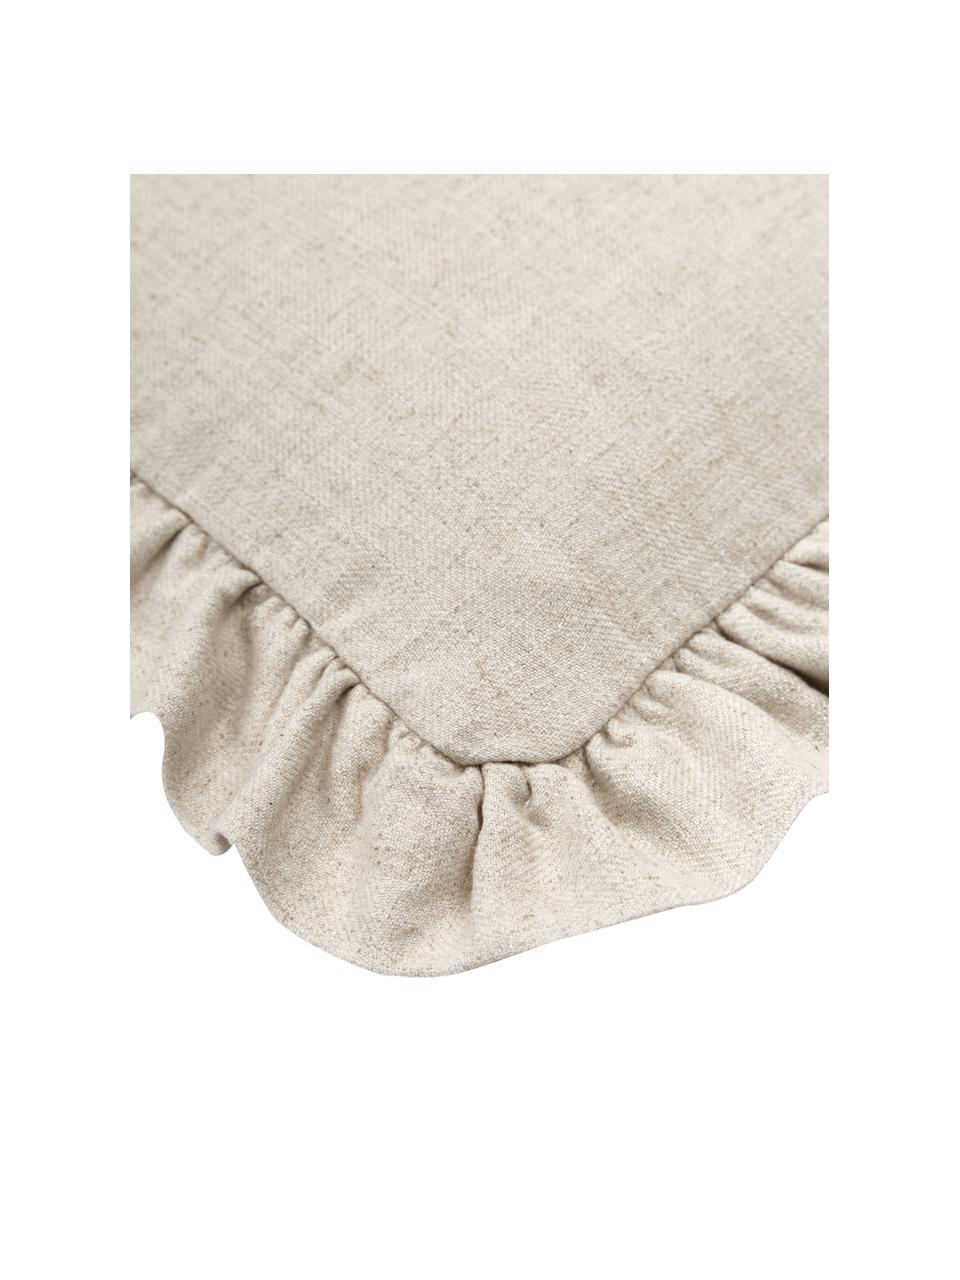 Povlak na polštář s volánky Camille, 60 % polyester, 25 % bavlna, 15 % len, Béžová, Š 45 cm, D 45 cm